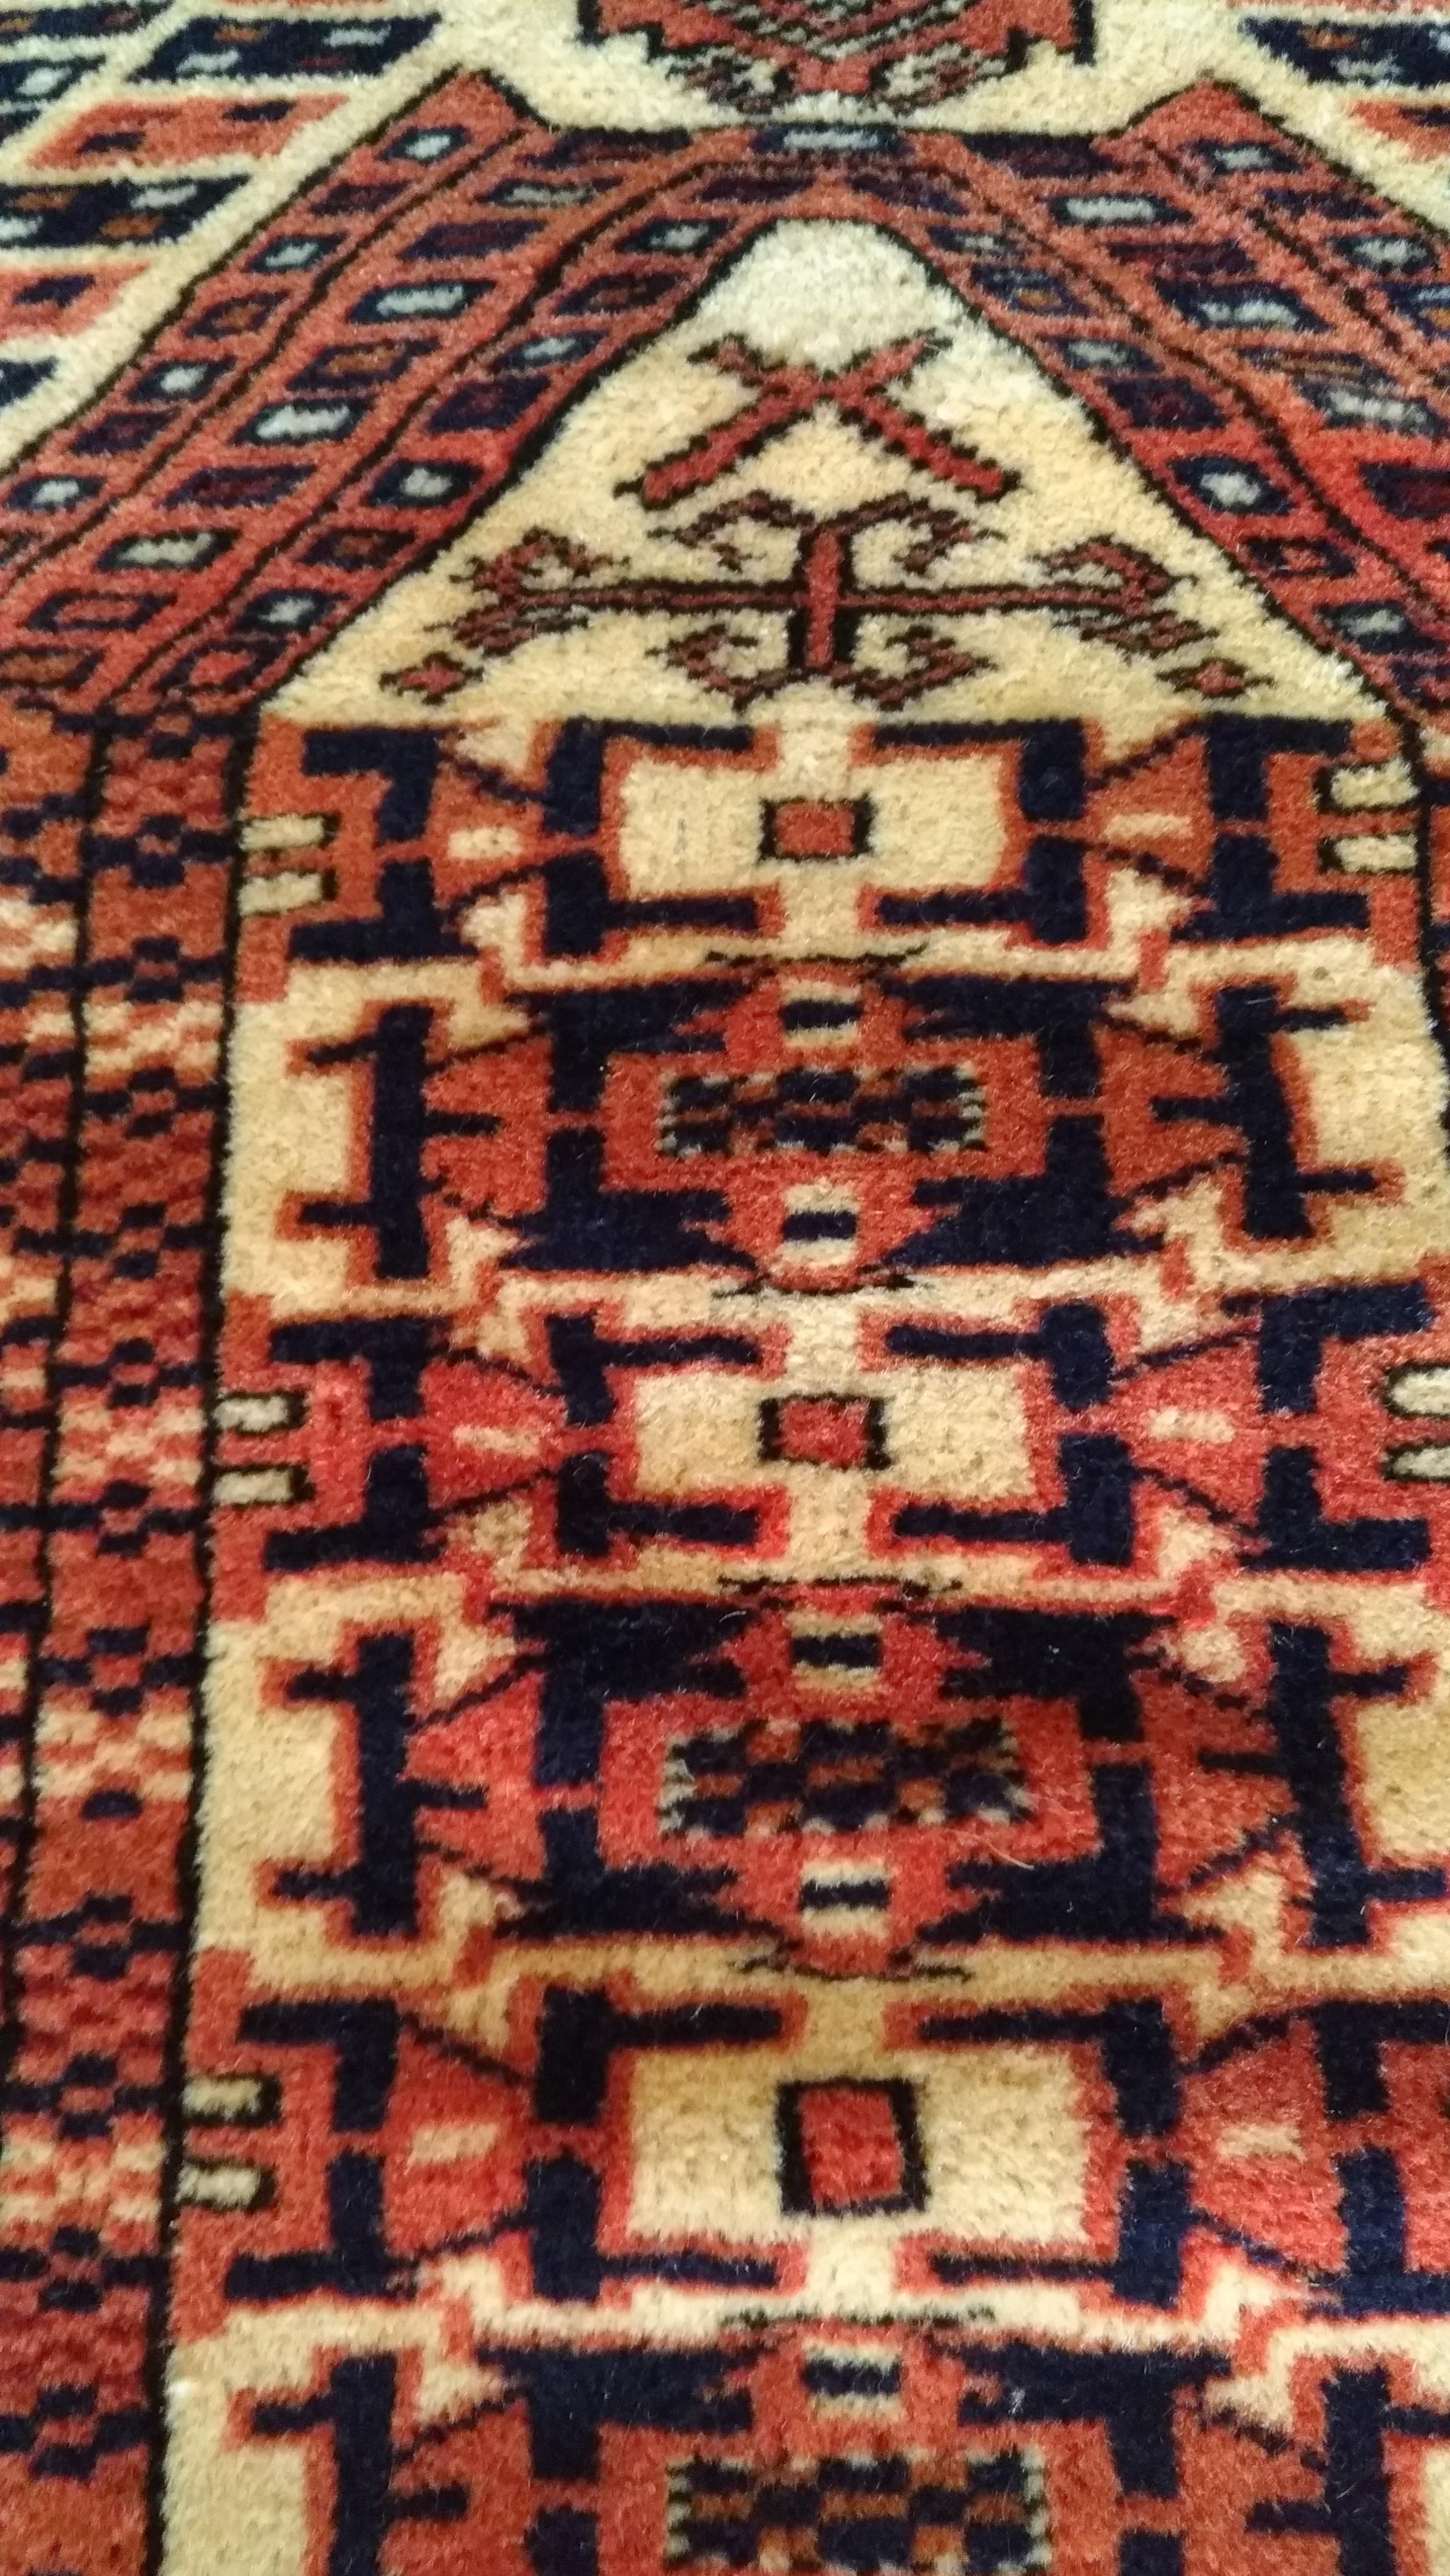 955 - ancient carpet from Turkmenistan.